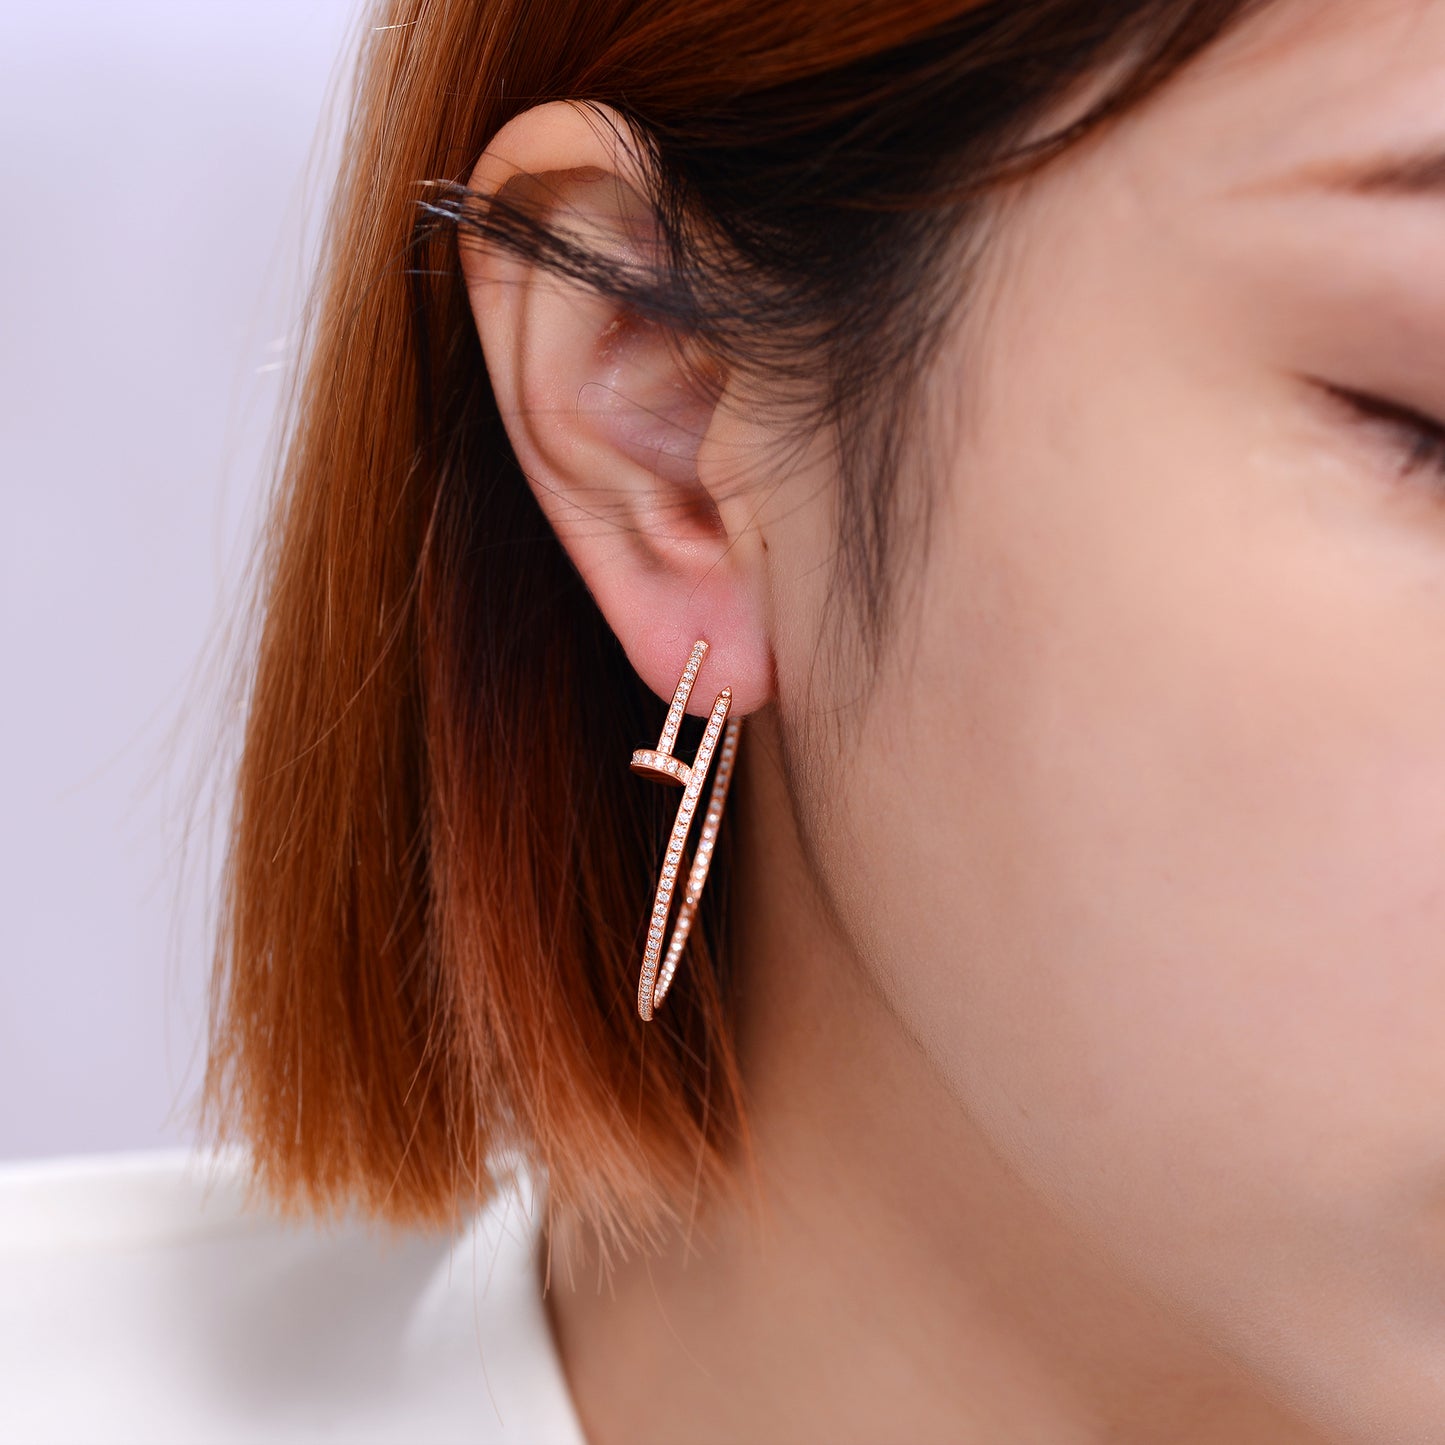 Nail Half Circle Earrings S925 Sterling Silver Stud Earrings Women's High-end Moissanite Earrings